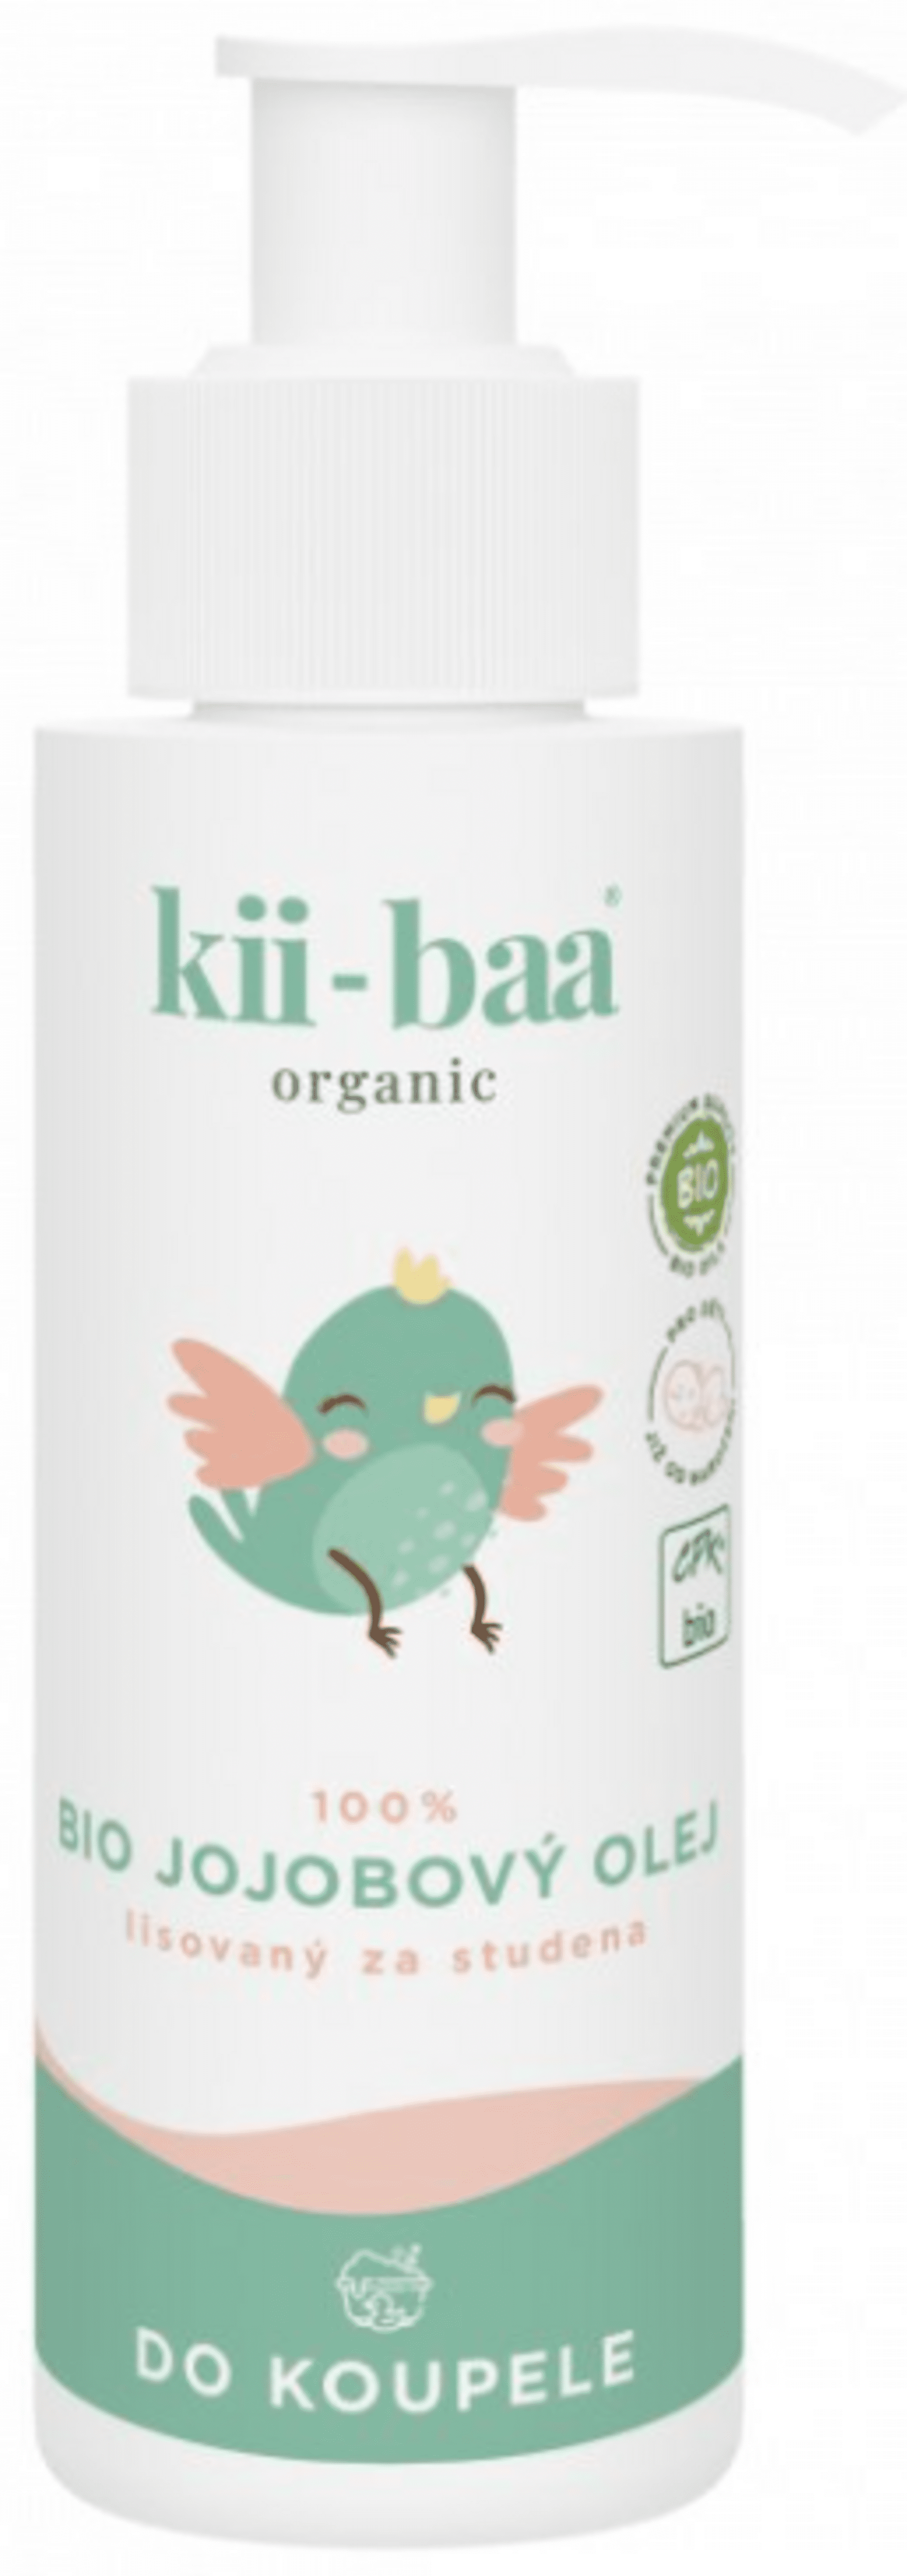 E-shop Kii-baa organic 100% Jojobový olej 0+ do kúpeľa BIO 100 ml